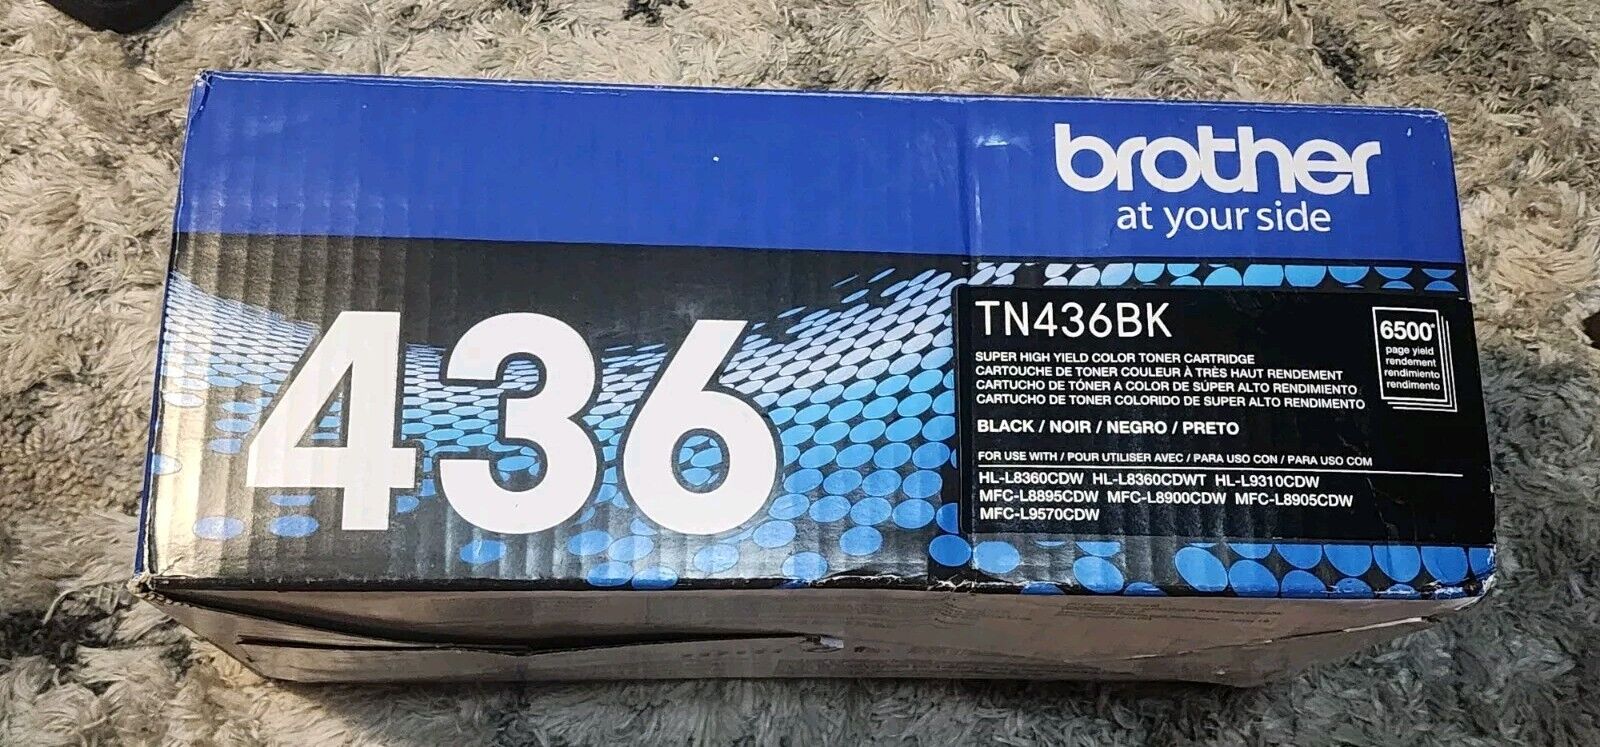 Bother TN436BK Original OEM Toner Cartridge, Black Super High Yield Sealed